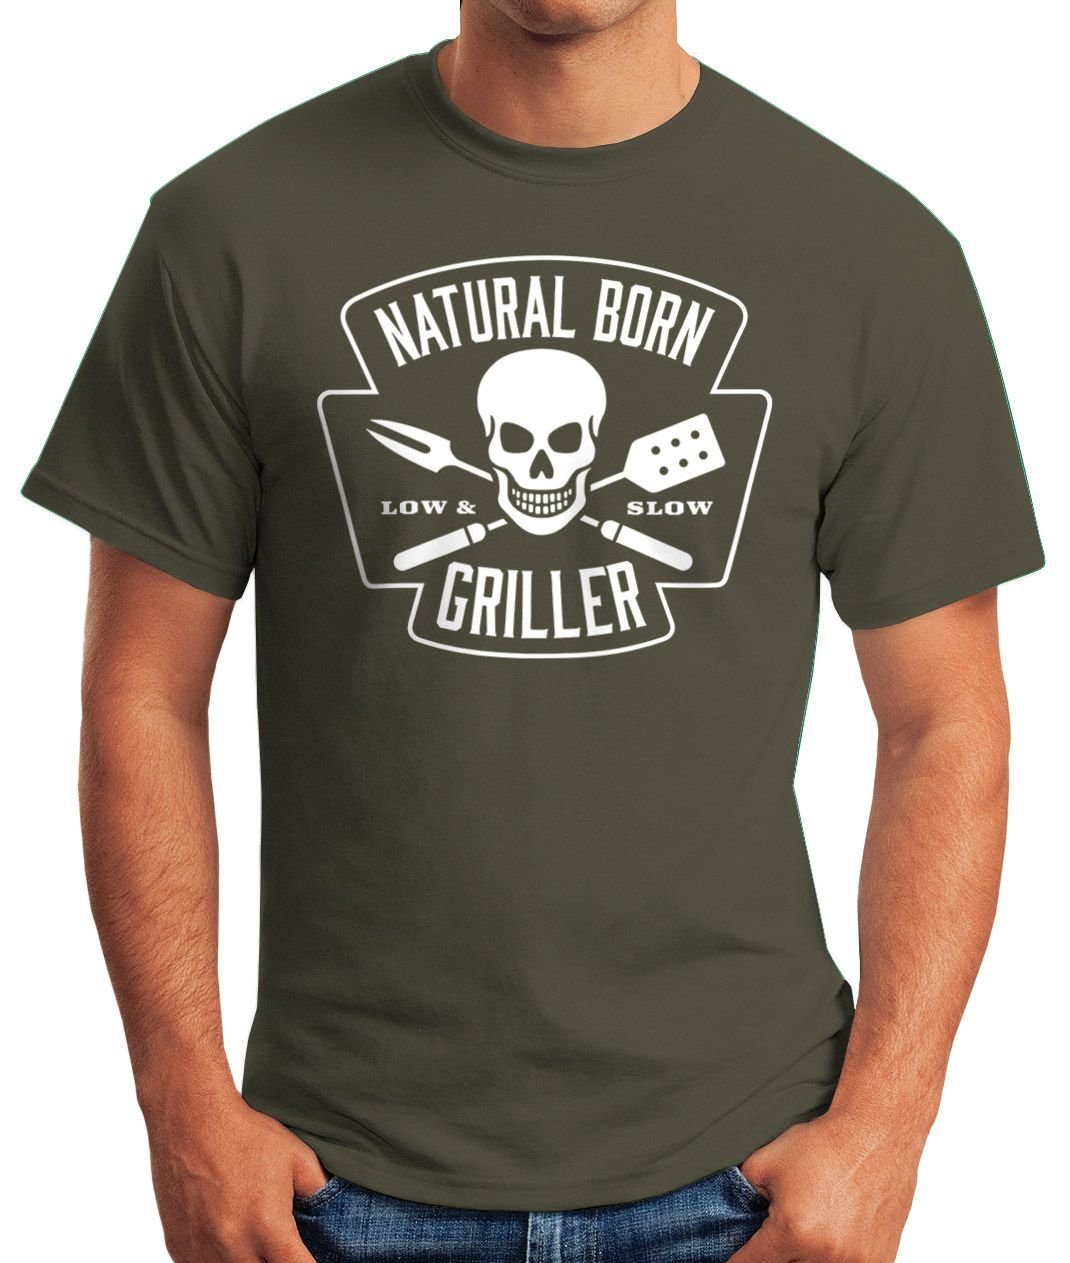 MoonWorks Print-Shirt Herren grün Born Grillen Moonworks® Sommer mit Food Fun-Shirt Griller Barbecue Print T-Shirt Tee BBQ Natural